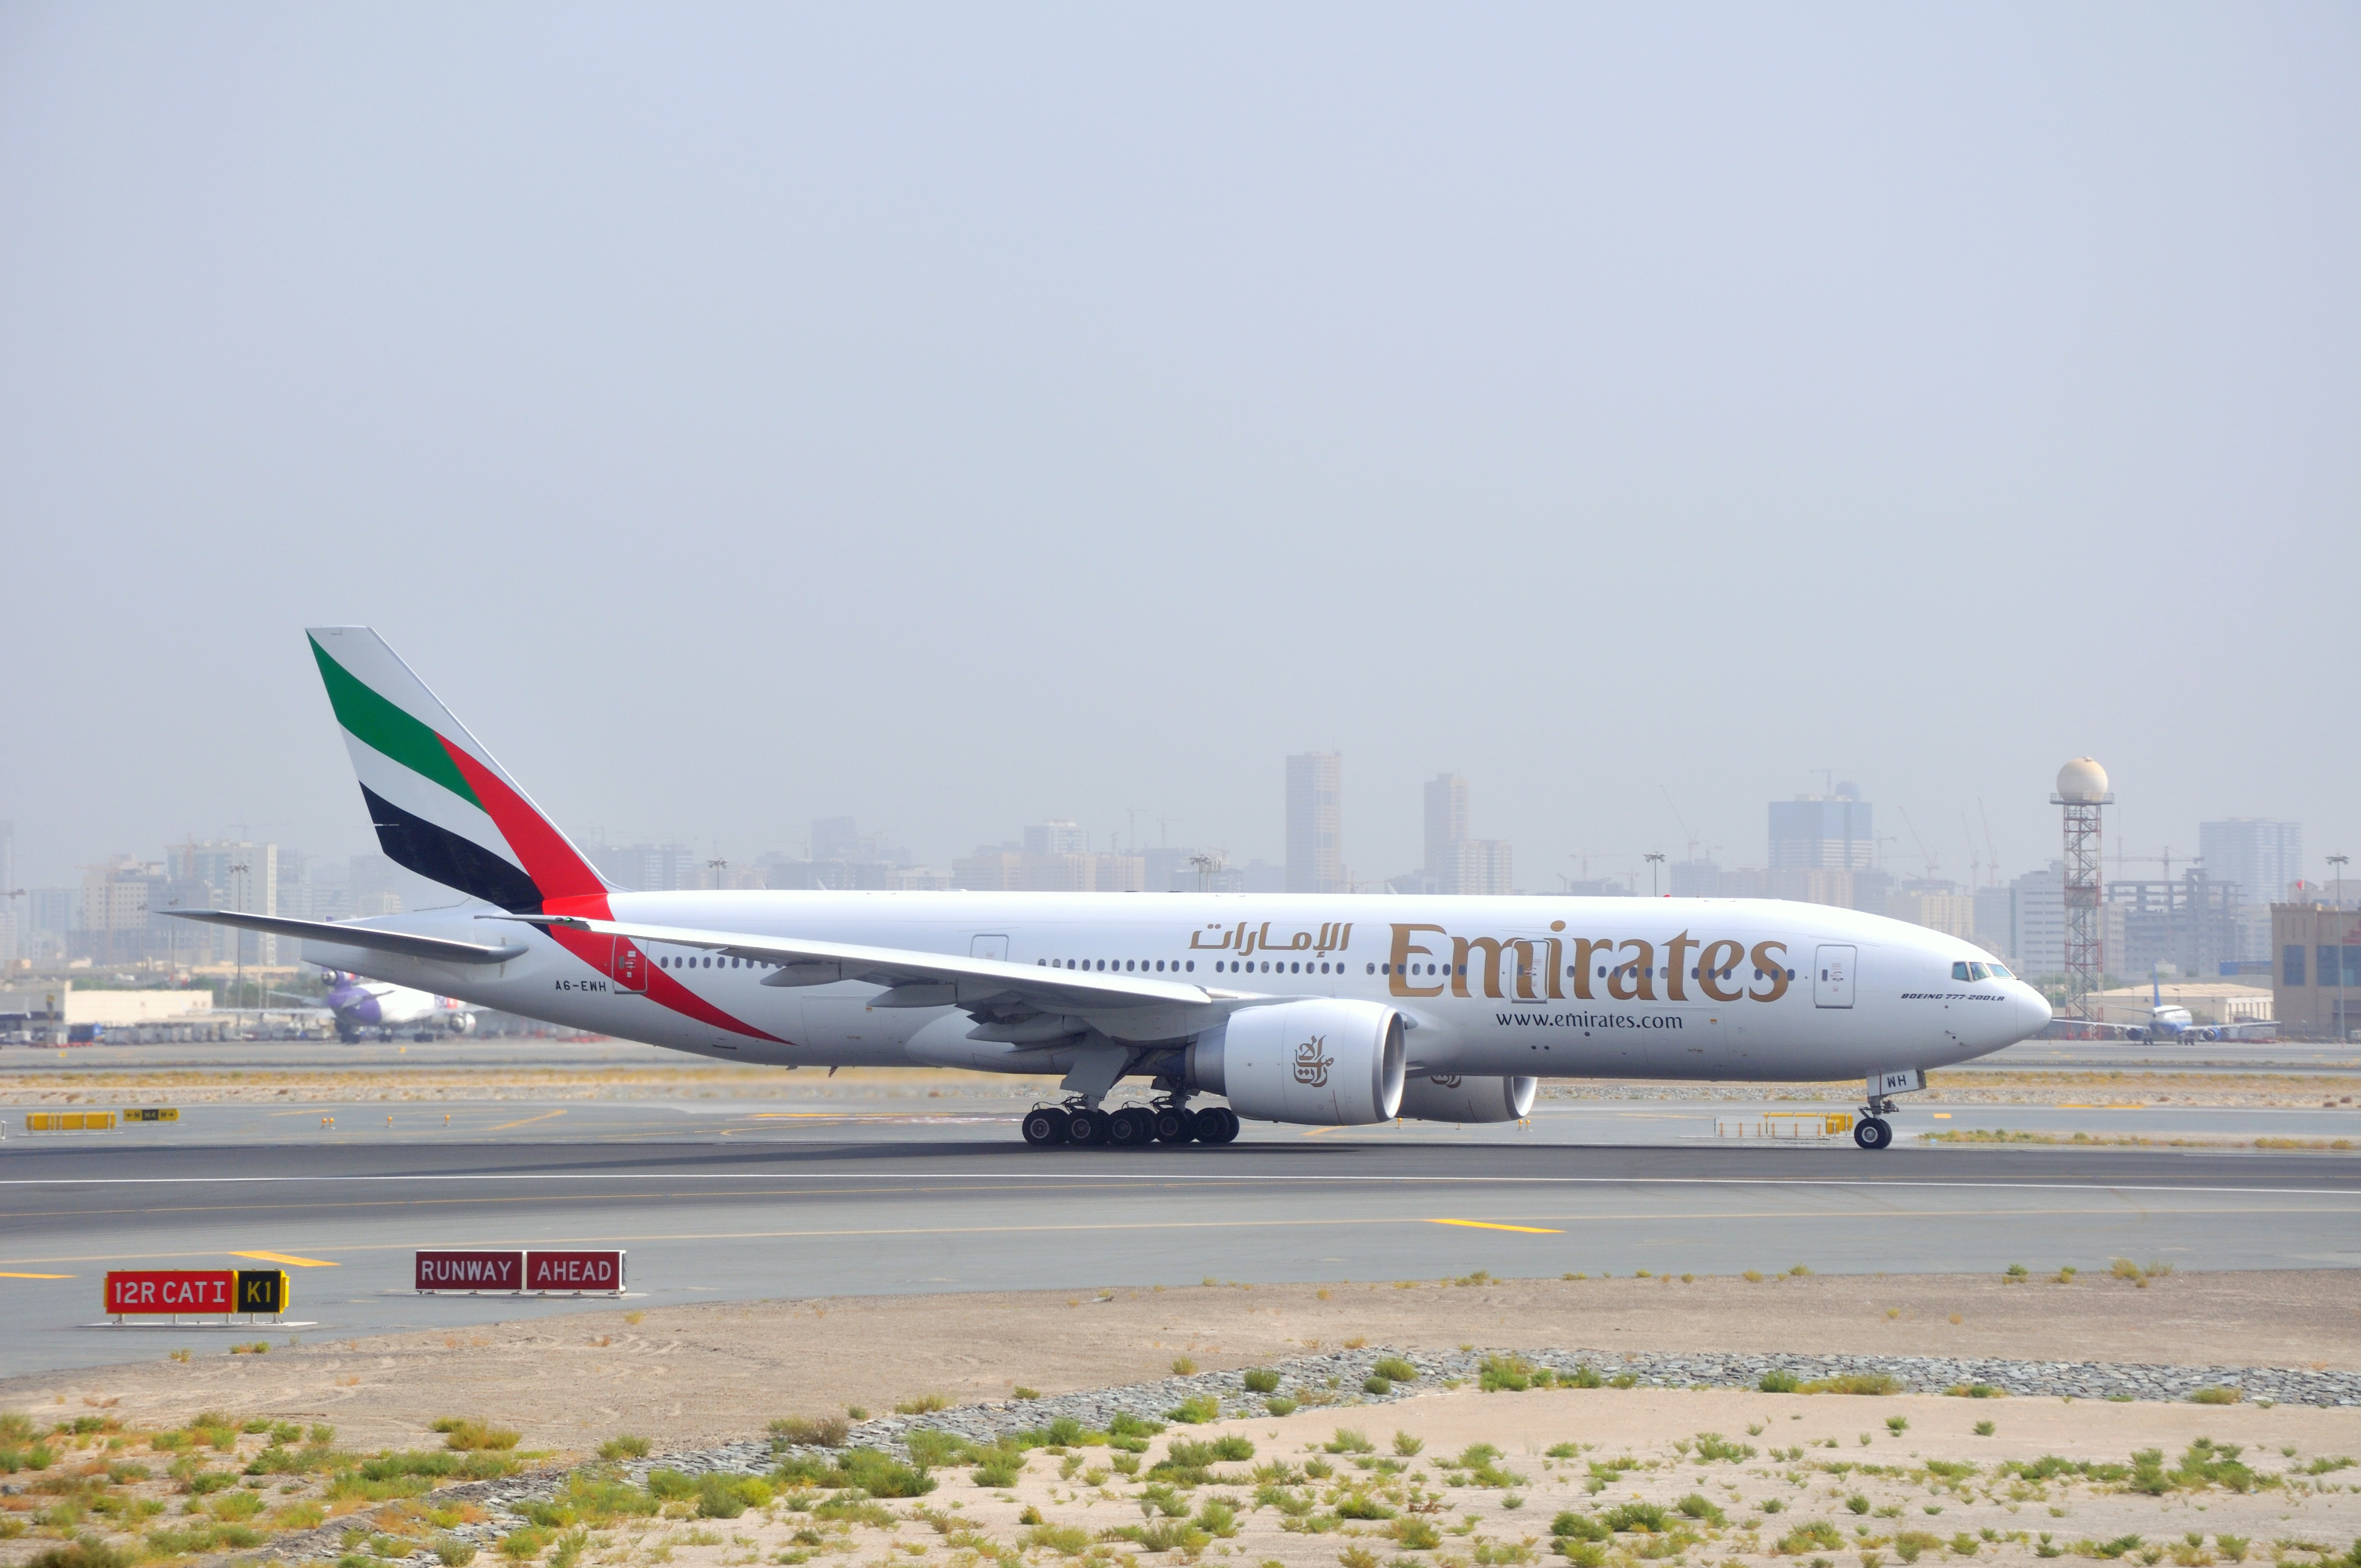 Dubai Airport Runway Length